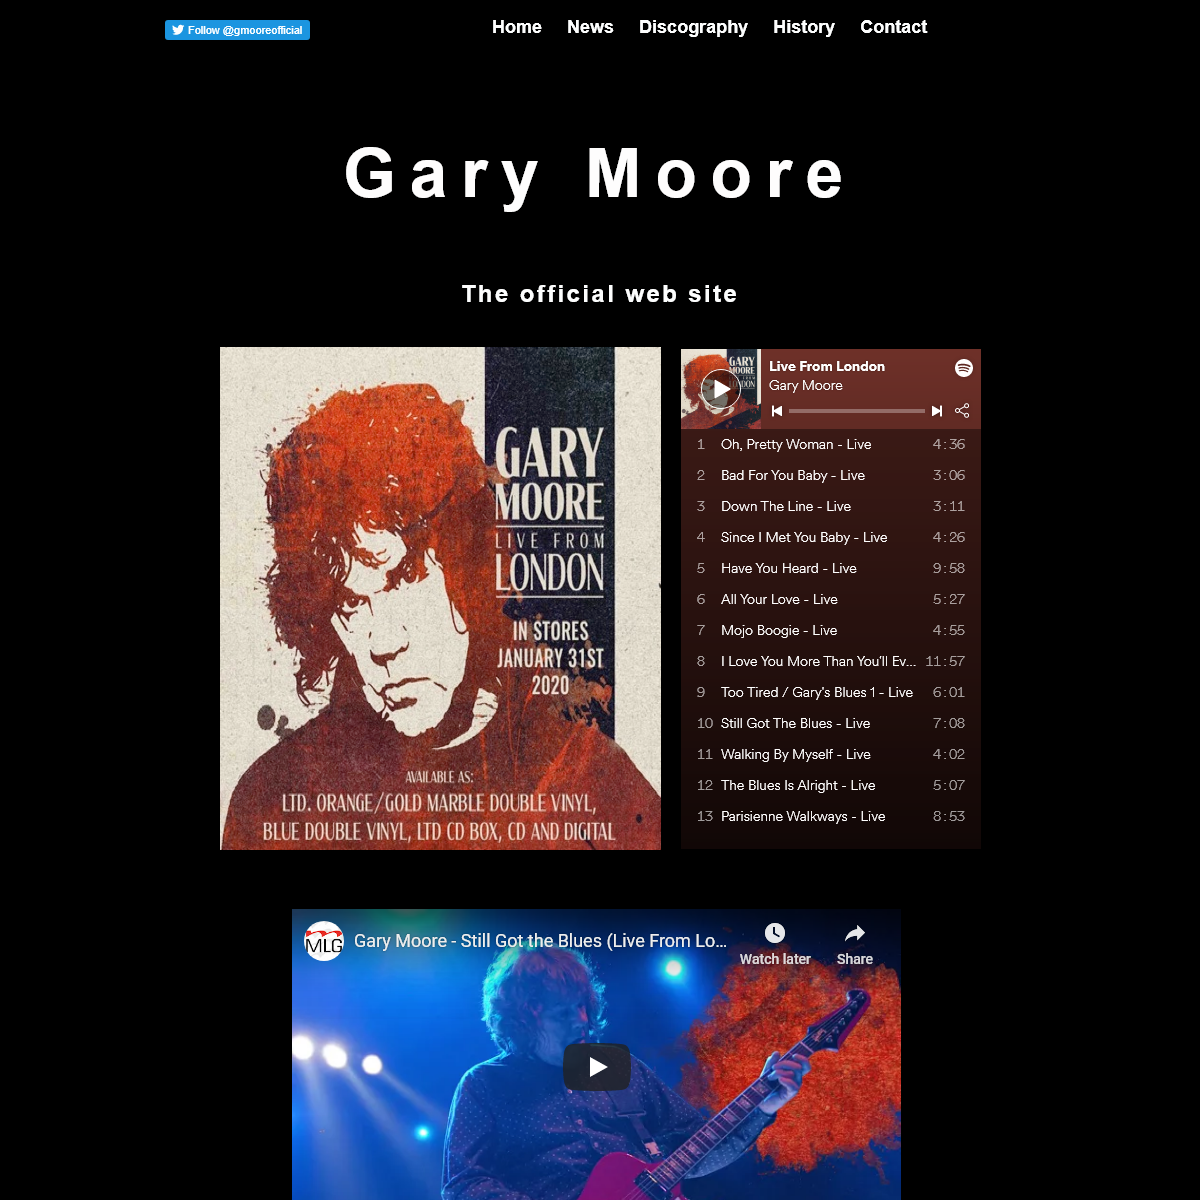 www.gary-moore.com